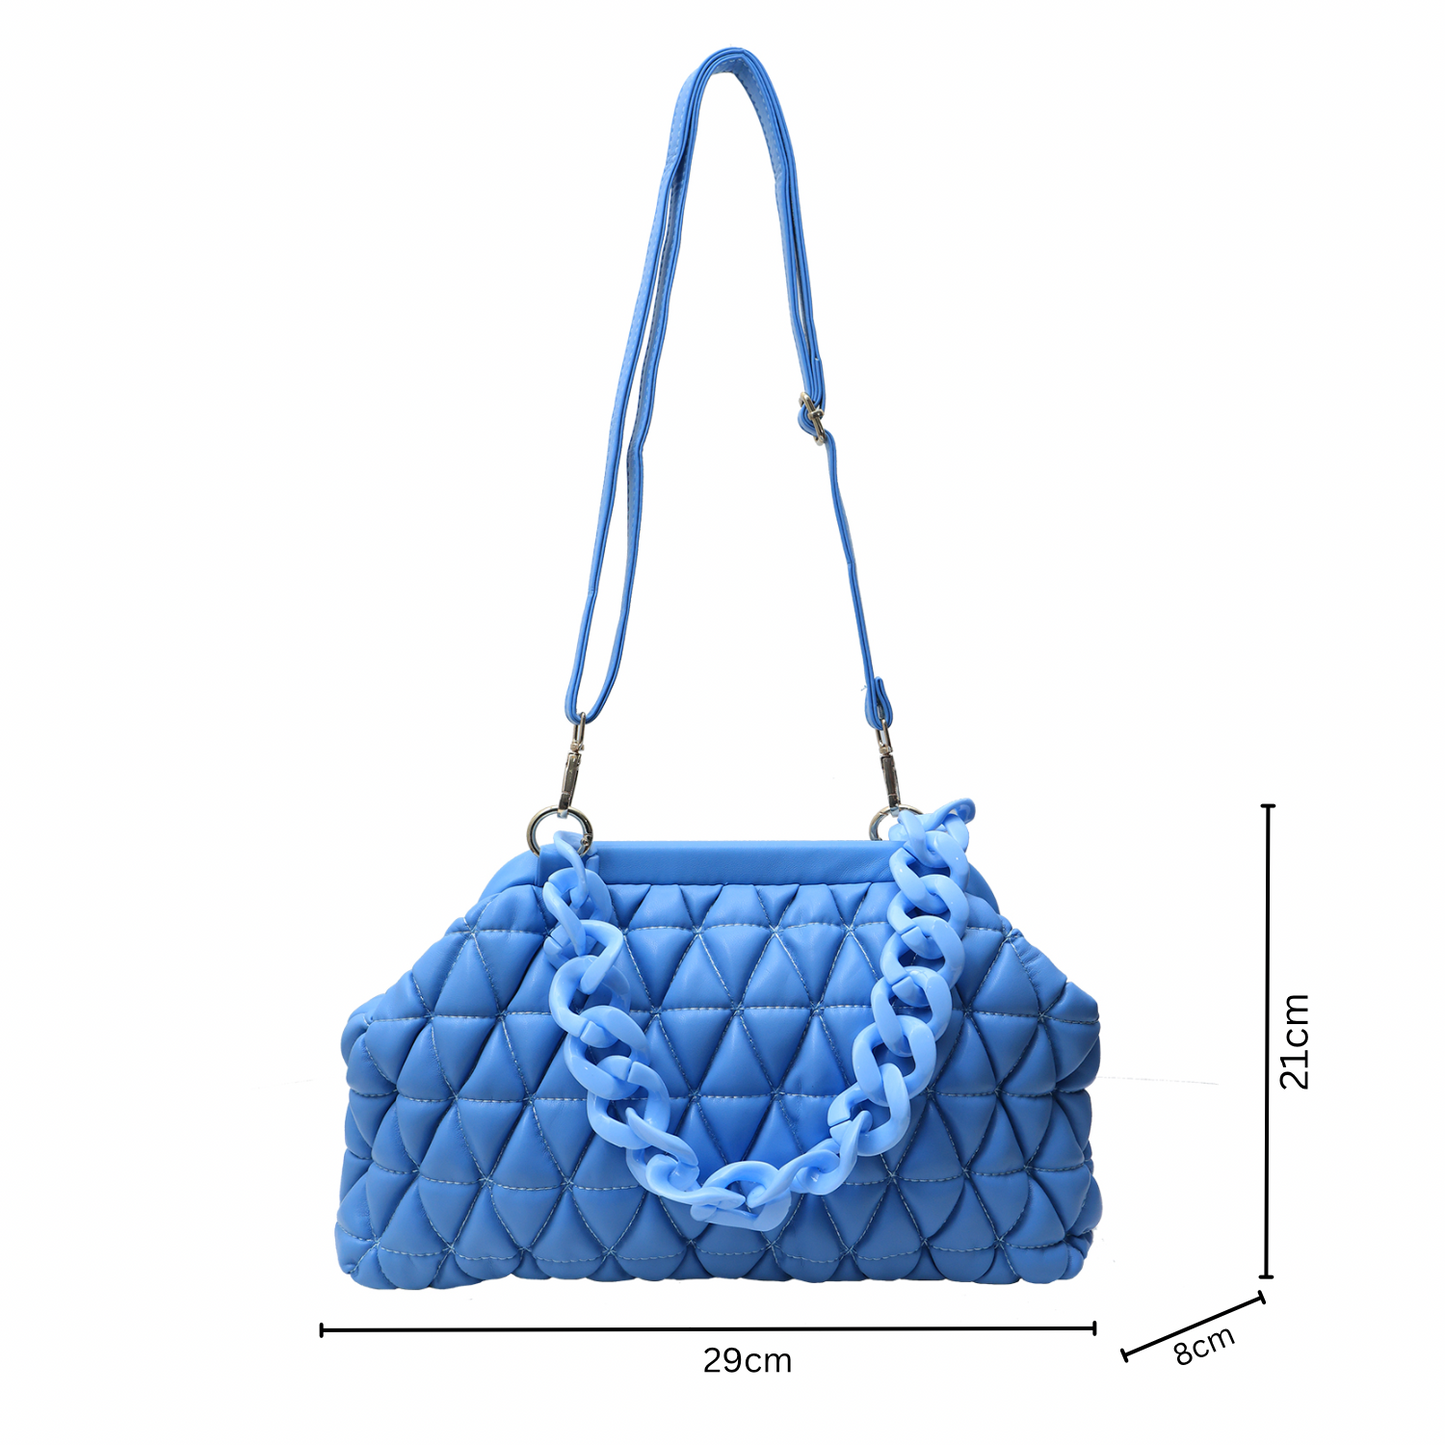 Stylish Women Handbag with elegant Chain handle